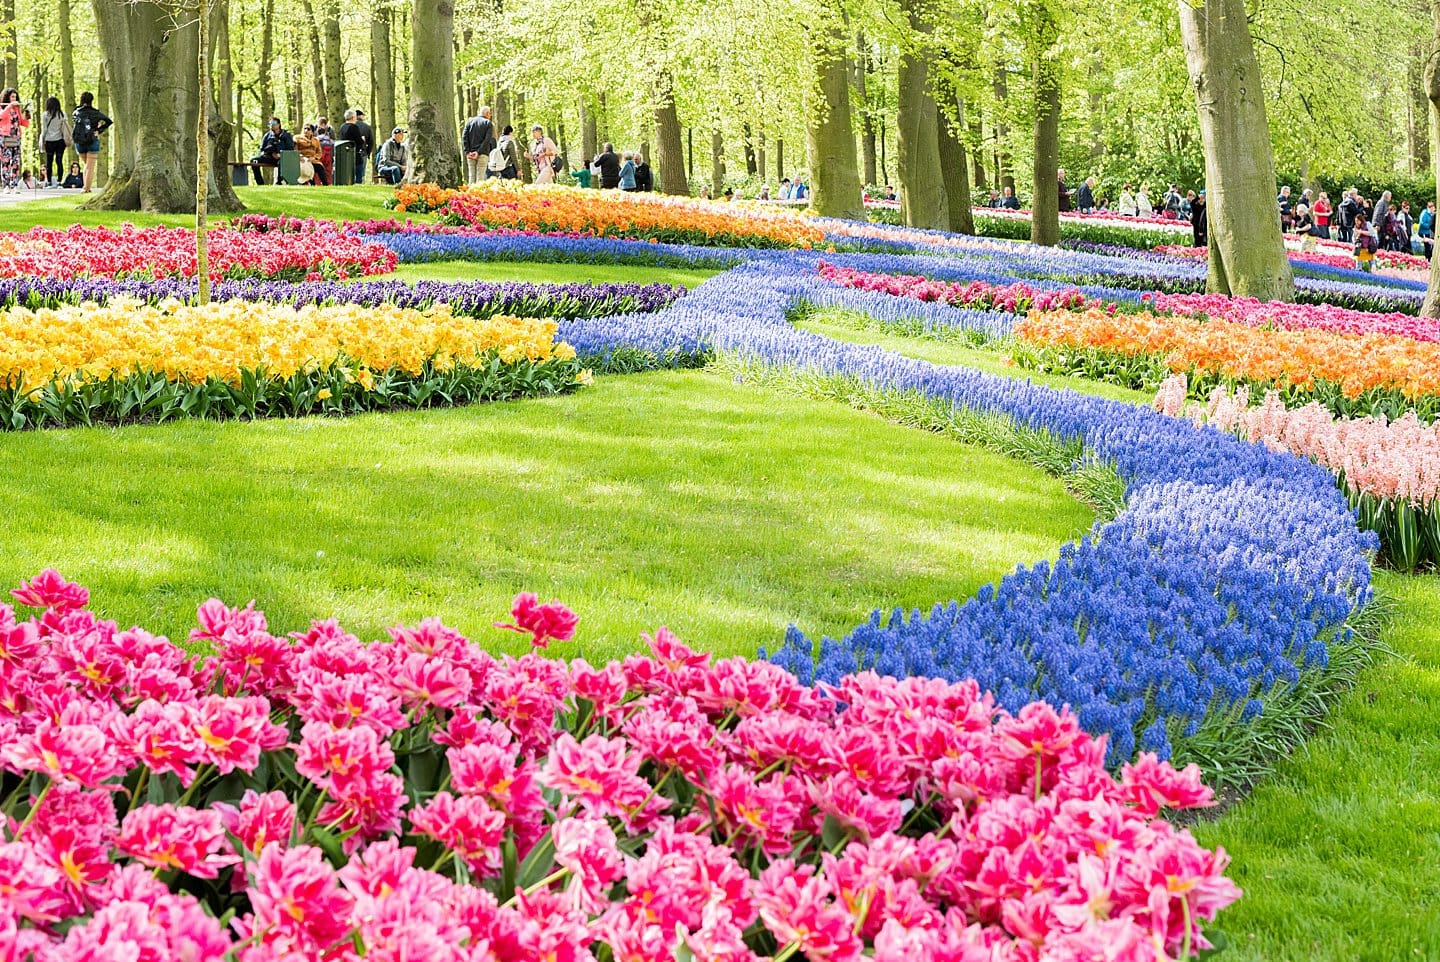 Amsterdam to Keukenhof The Tulip Garden of Your Dreams